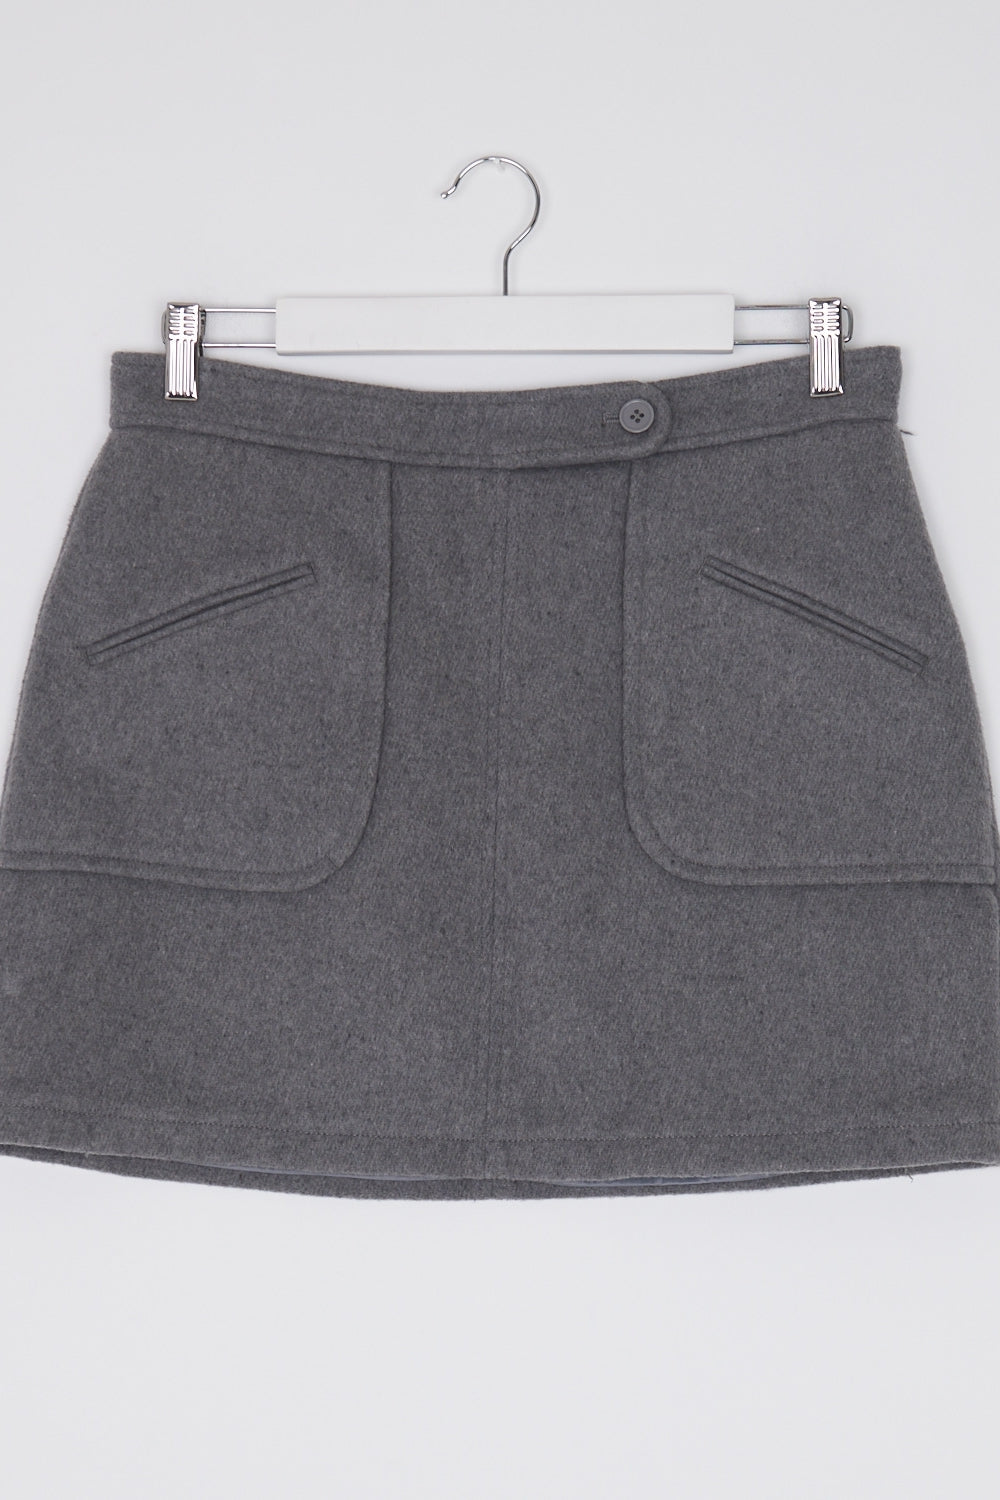 Country Road Grey Wool Blend Mini Skirt 10